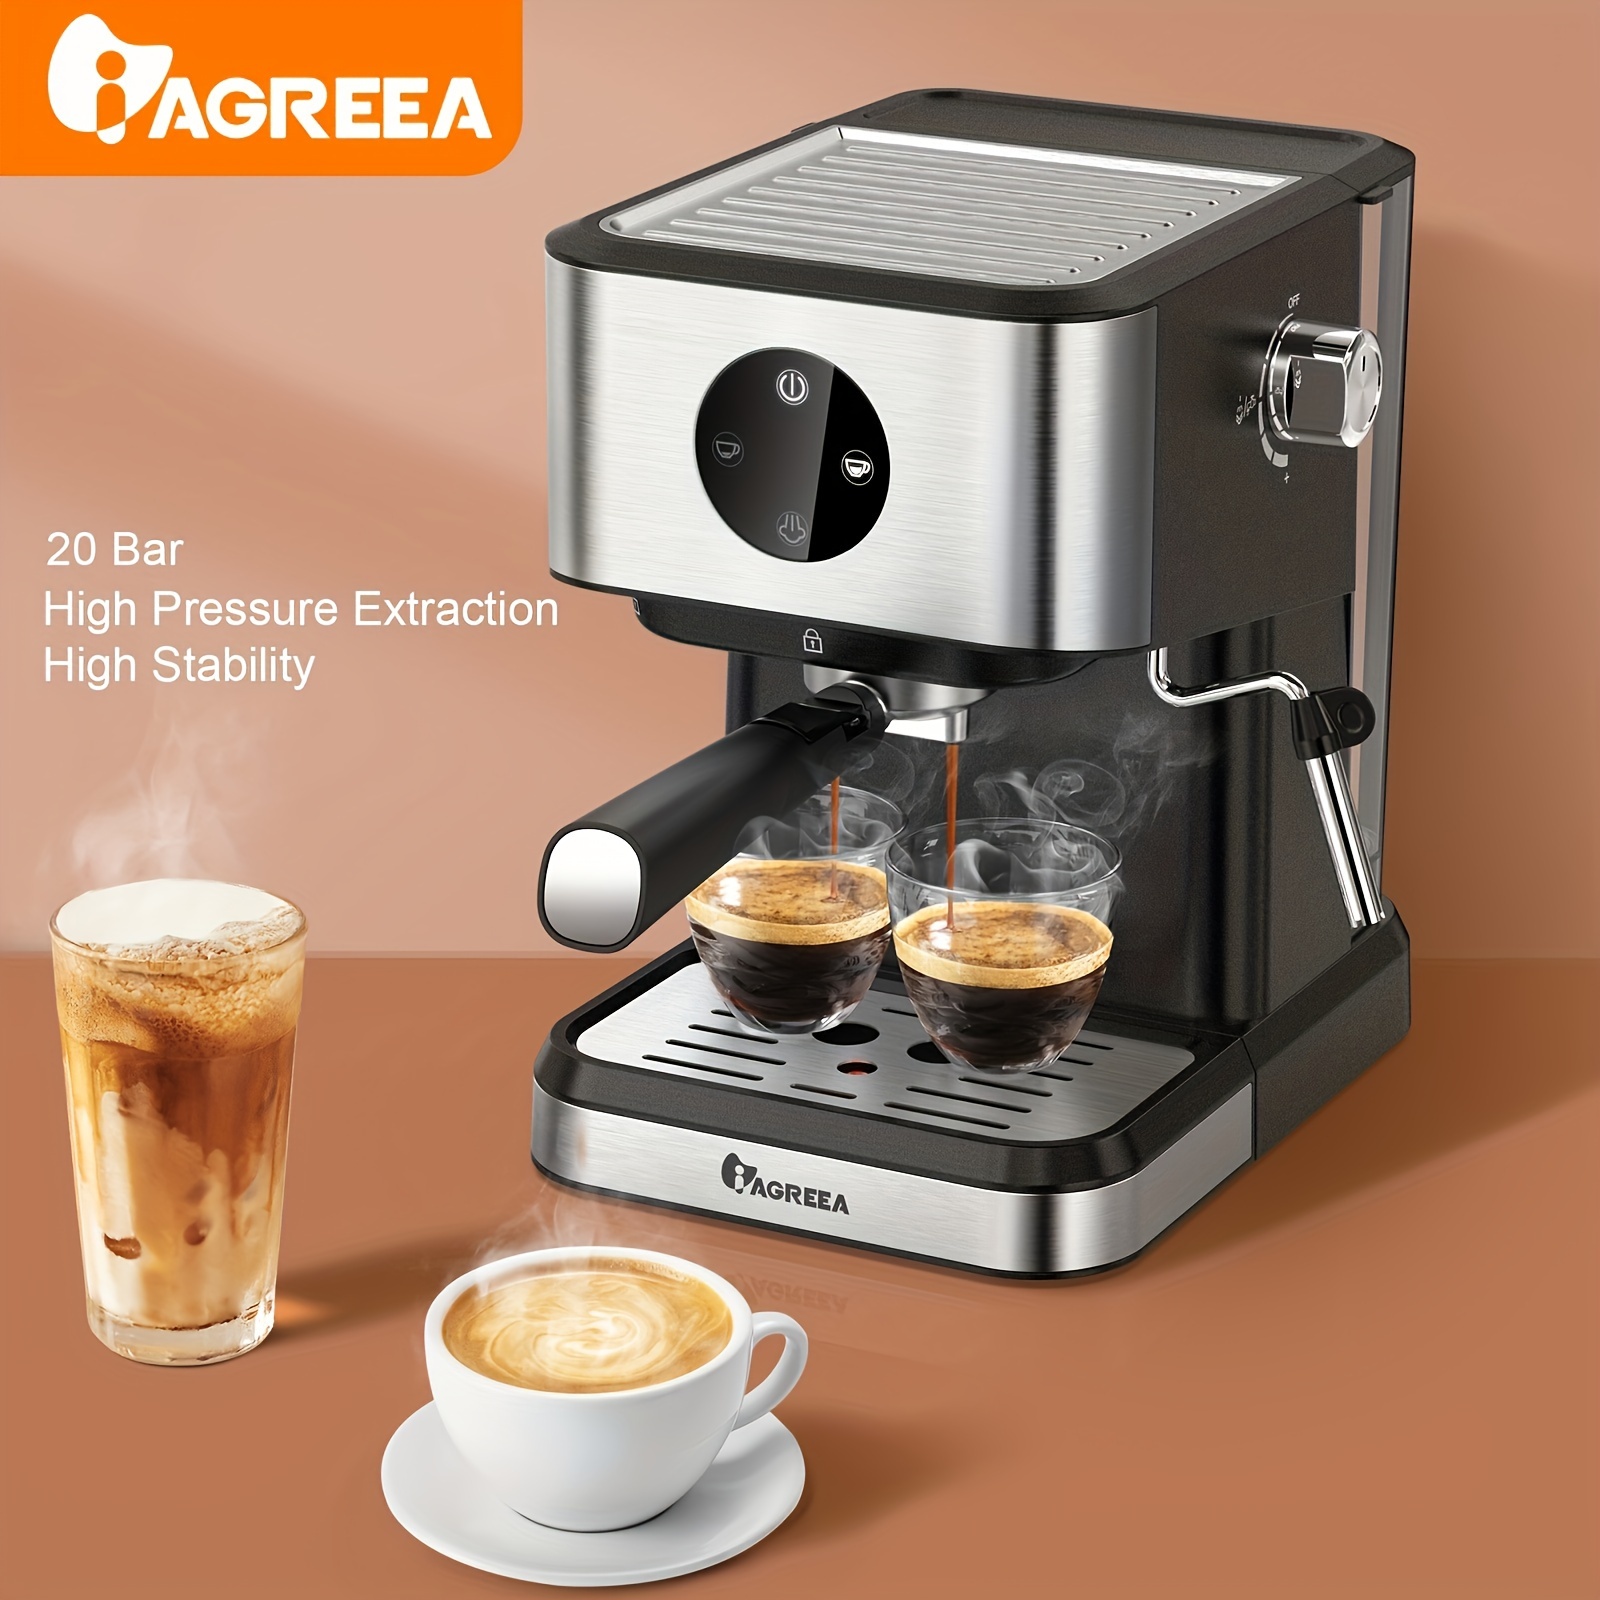 FOHERE Máquina de café expreso, cafetera de café expreso de 15 bar y  capuchino con espumador de leche, máquina de café espresso profesional para